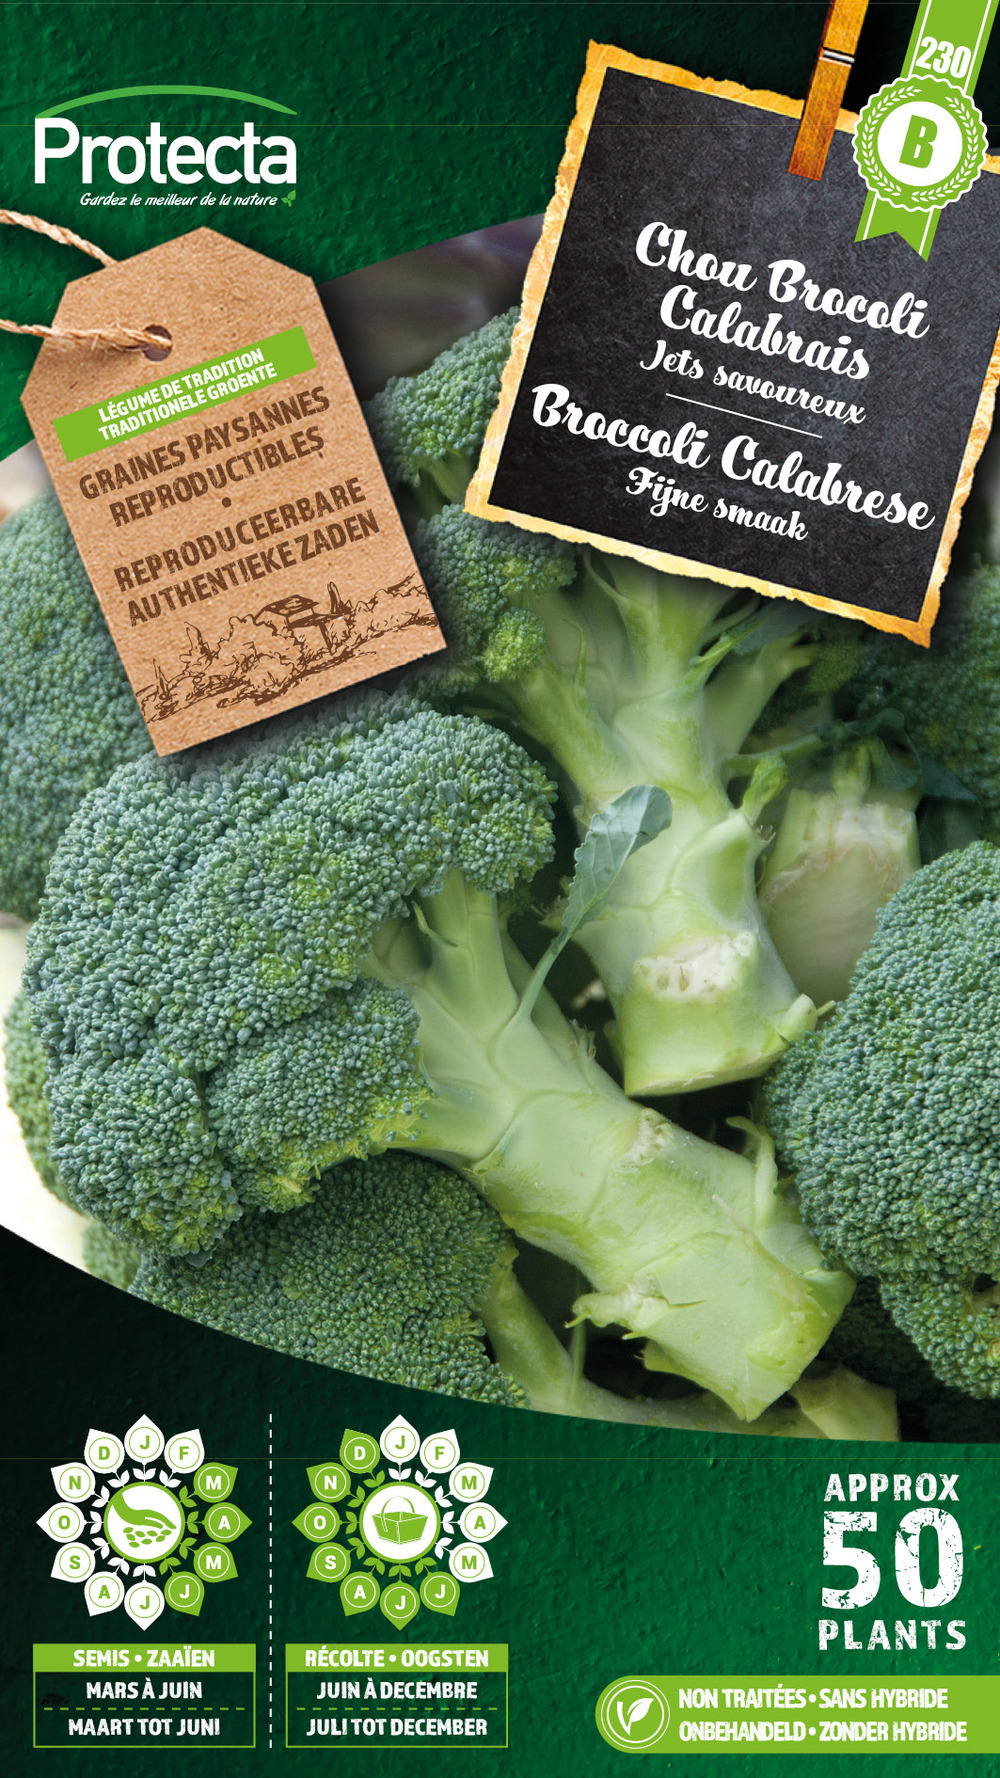 Chou brocoli calabrais – protecta graines paysanne - ca. 1 gr